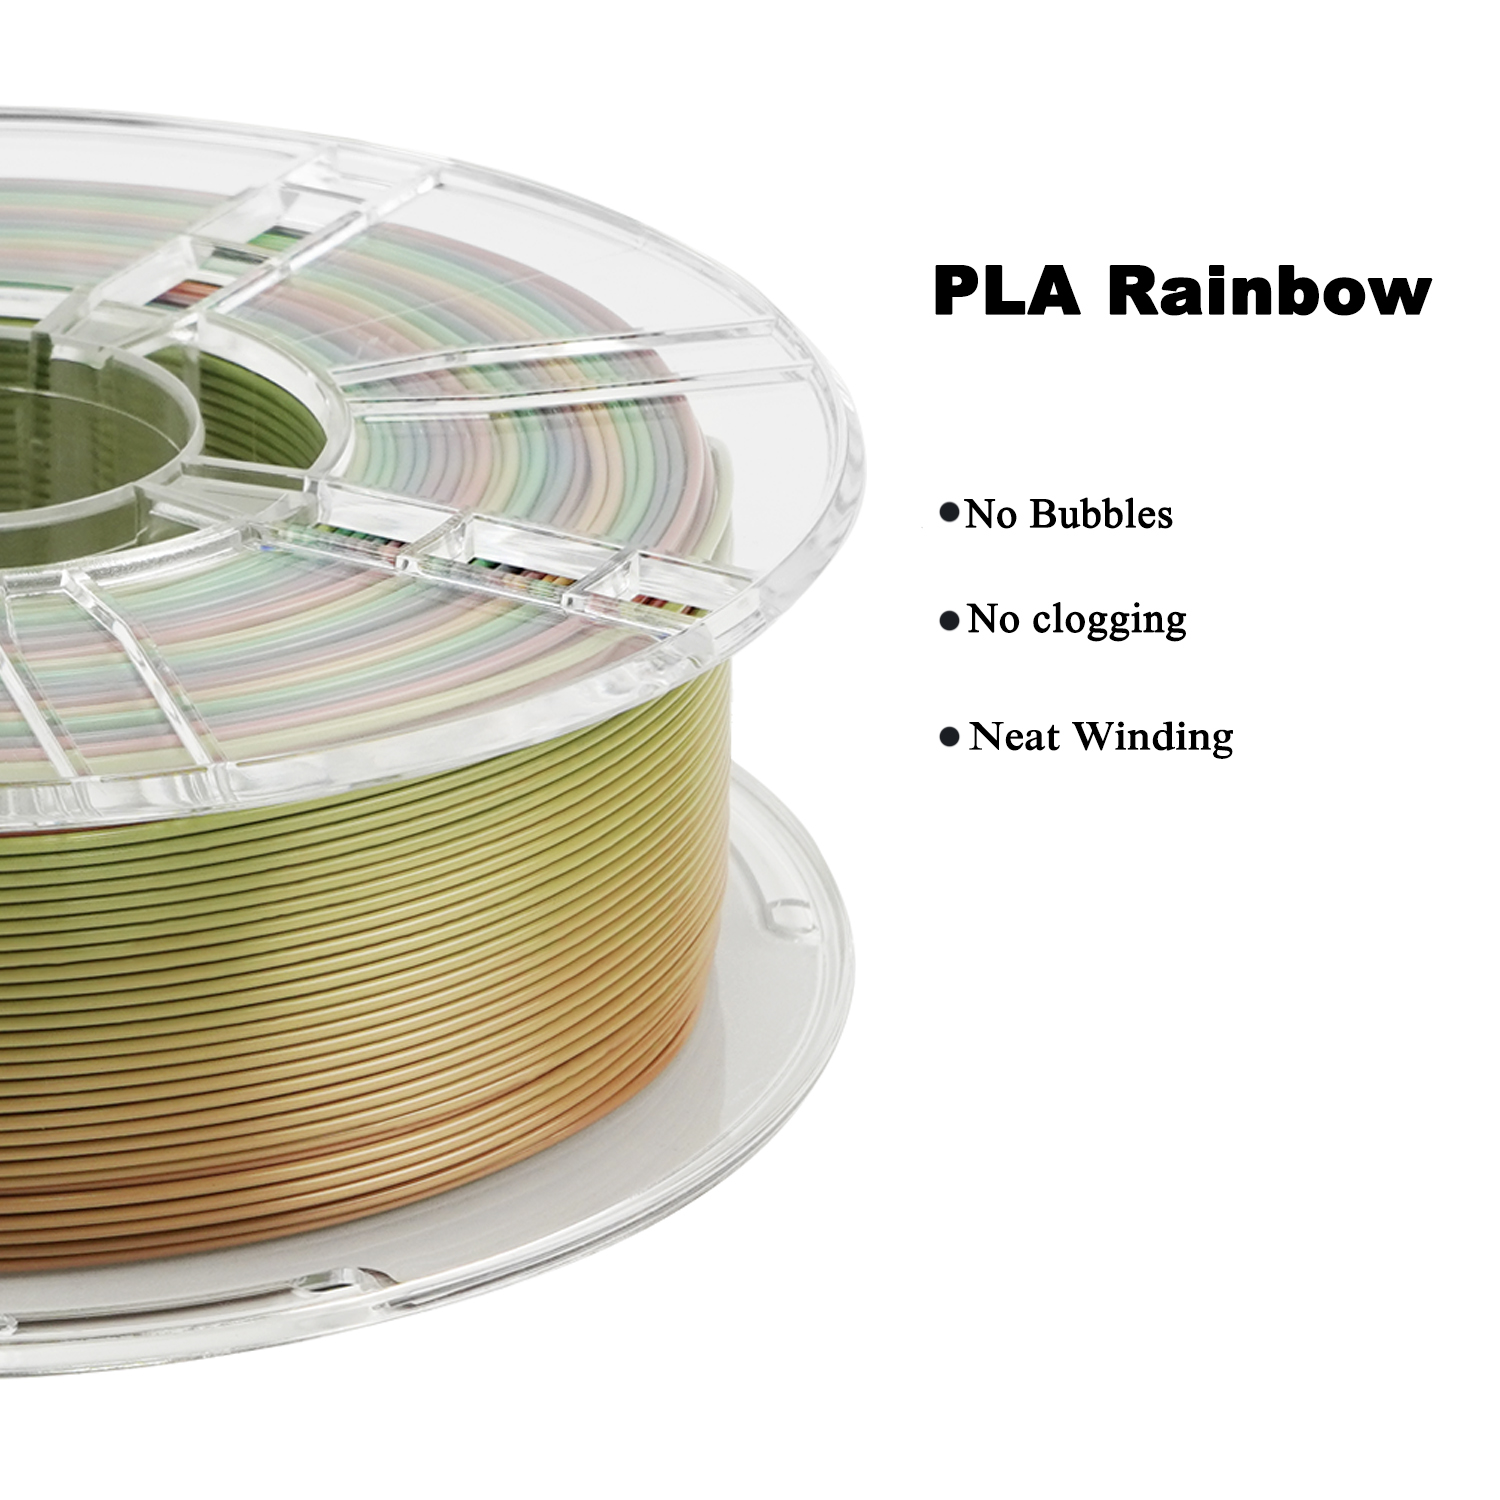 R3D Silk Rainbow 7 evolt impressão 3D Portugal Europa